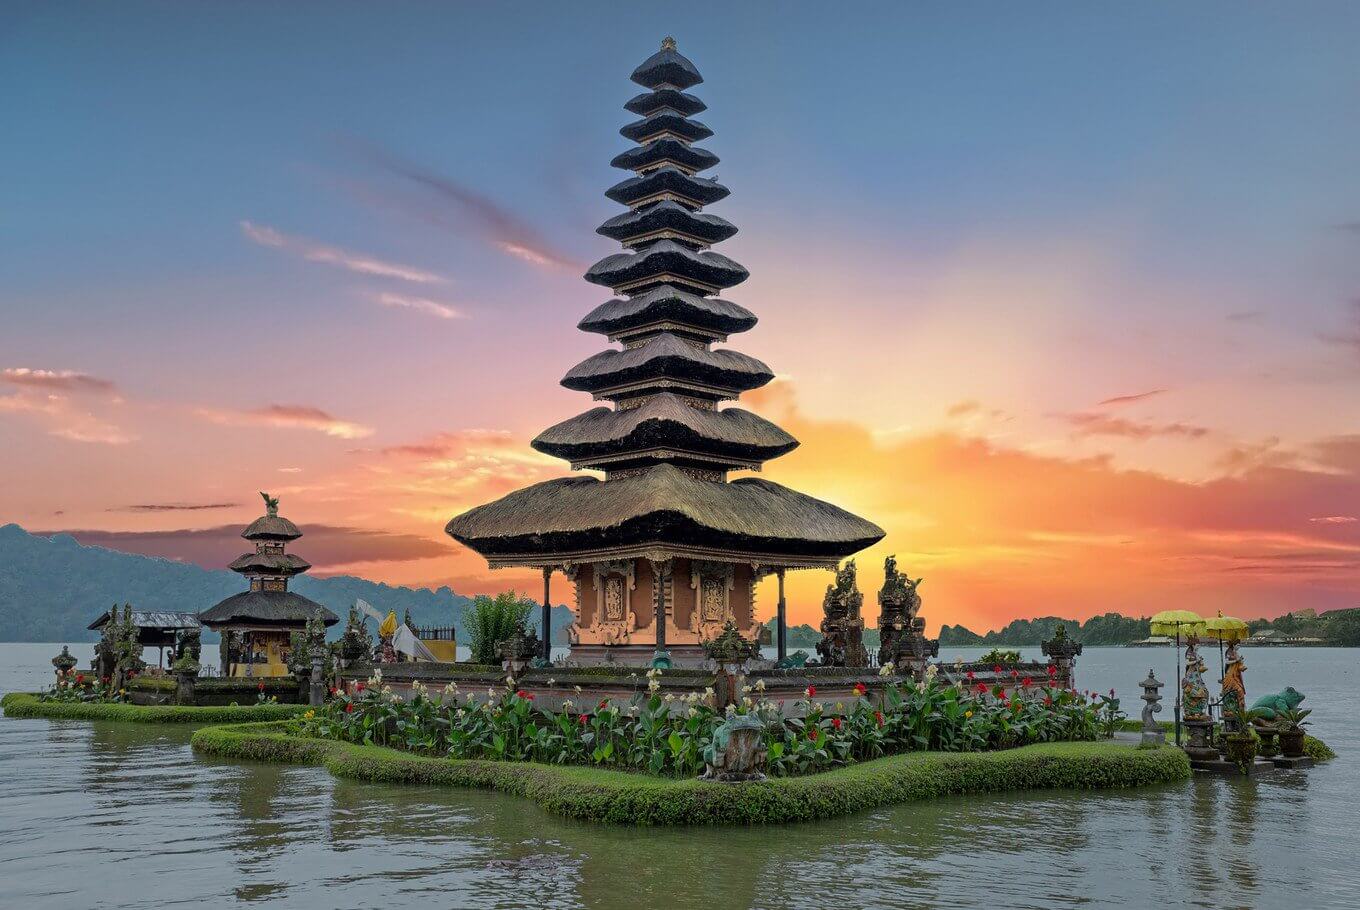 Honeymoon In Bali With Sunset Dinner